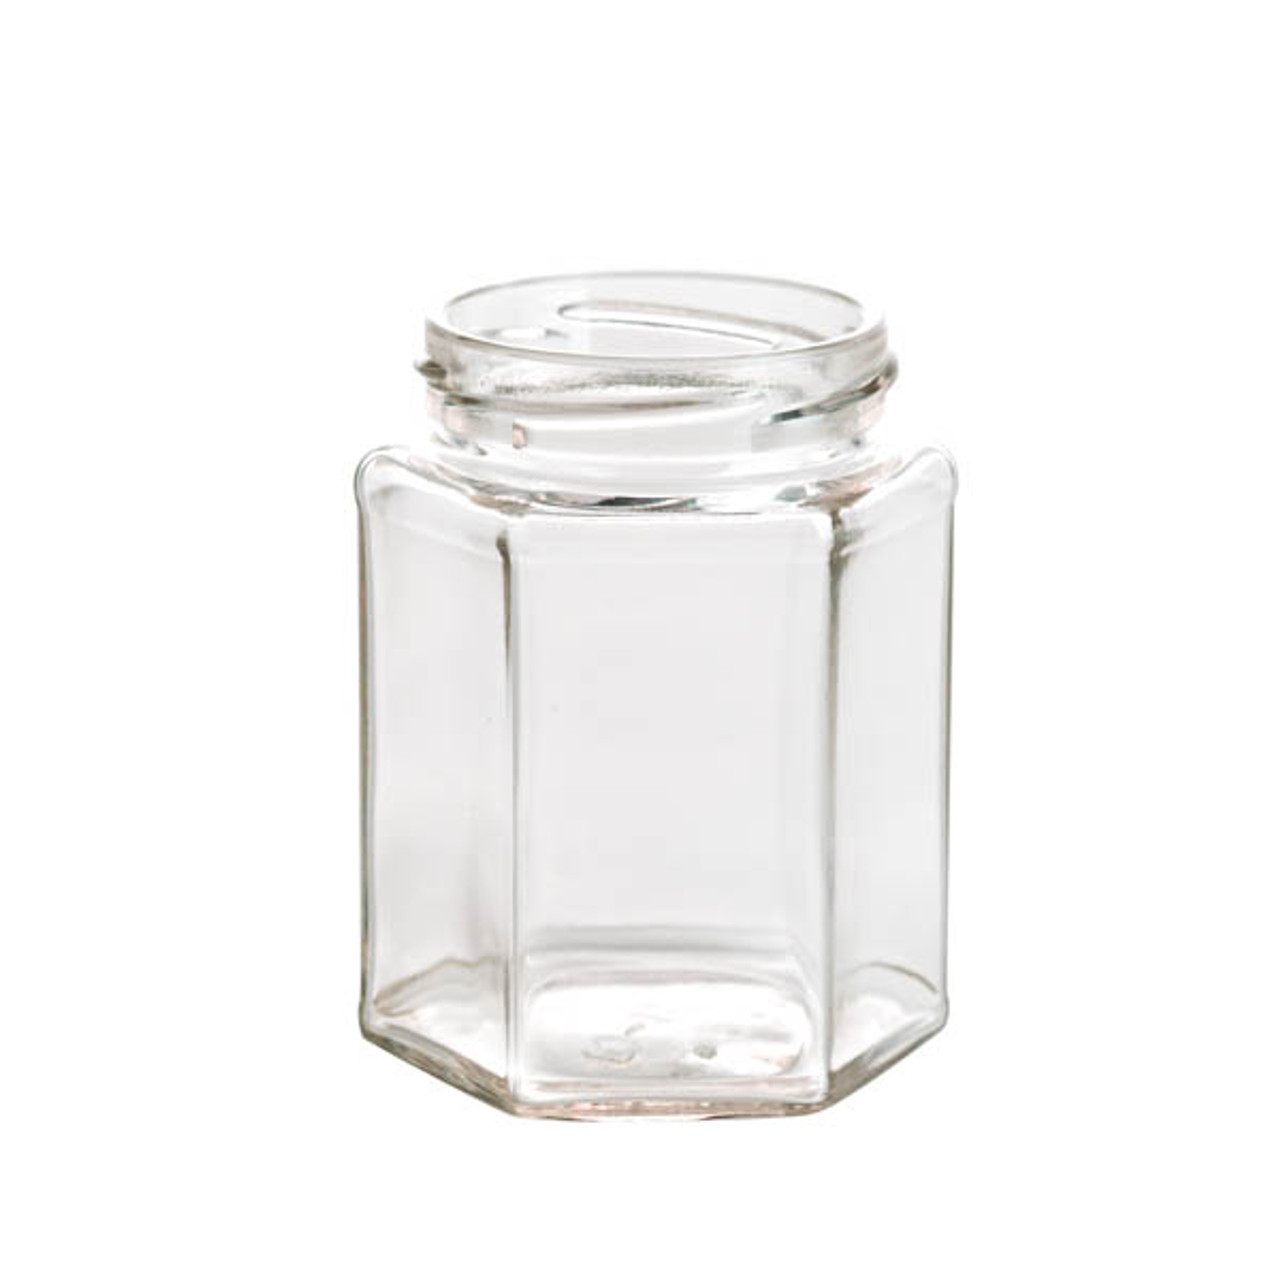 Oval Hexagon Glass Jar with White Lid, 12 oz